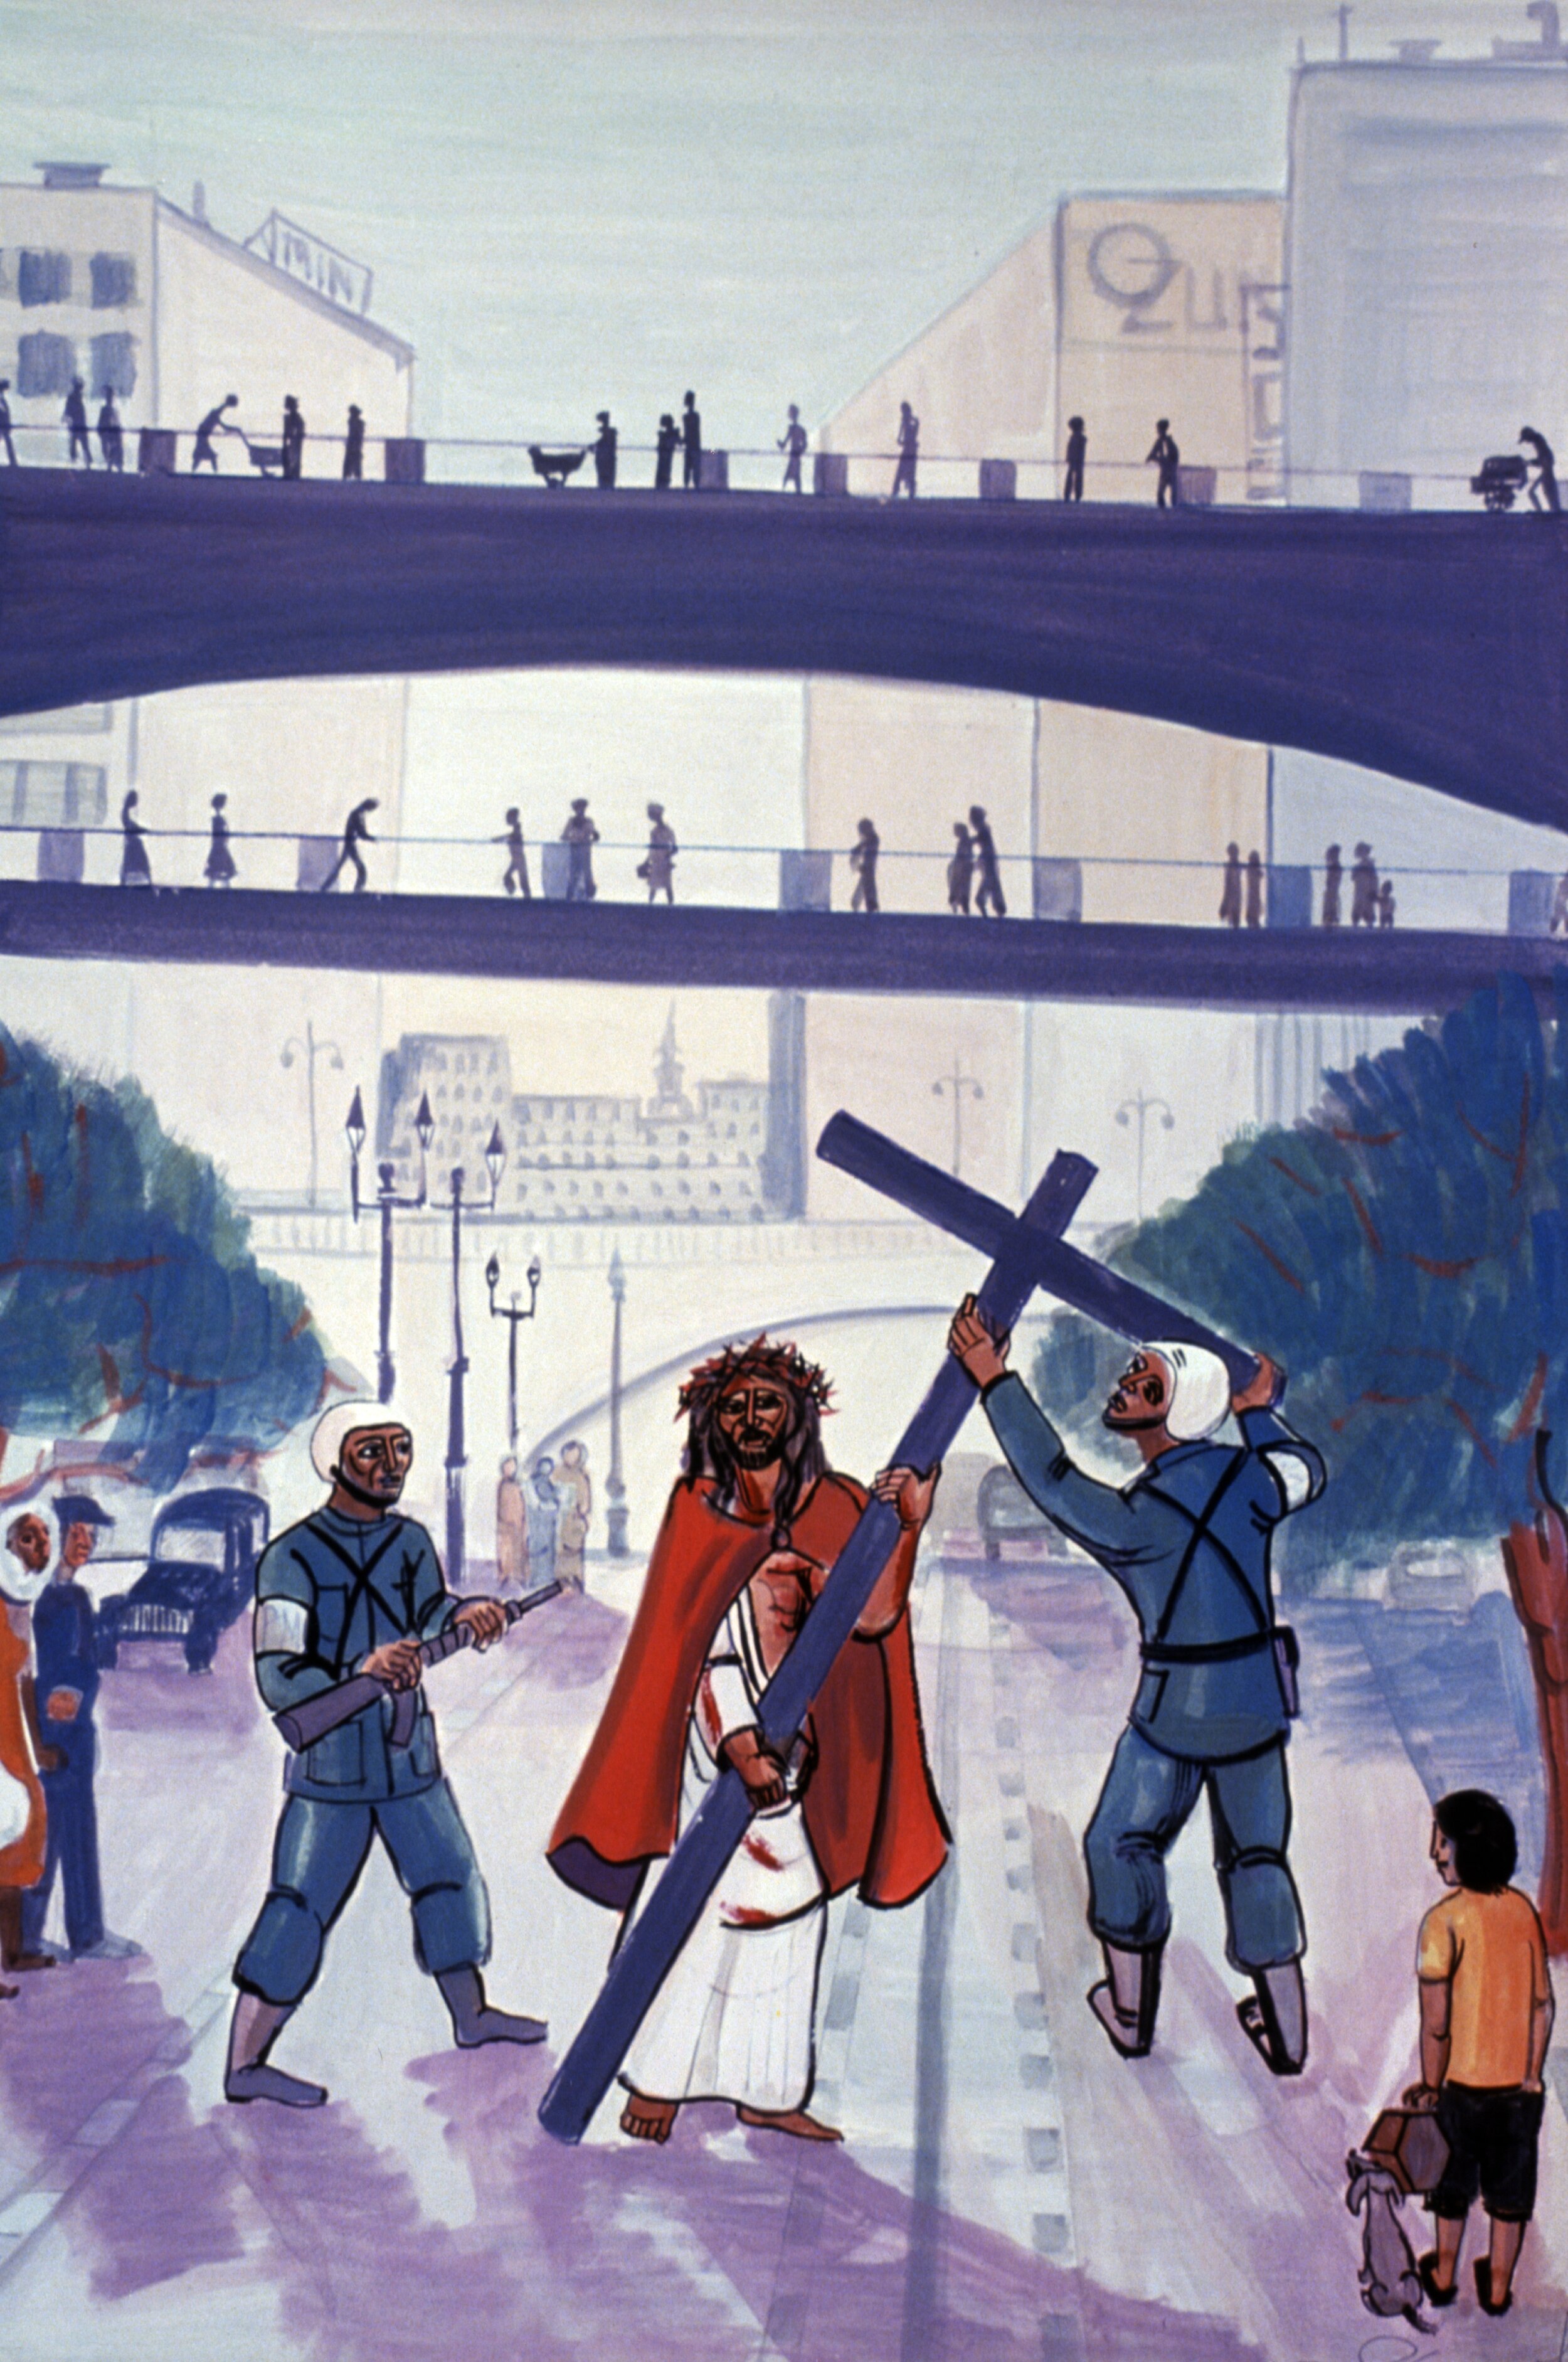 2. Jesus takes up his Cross